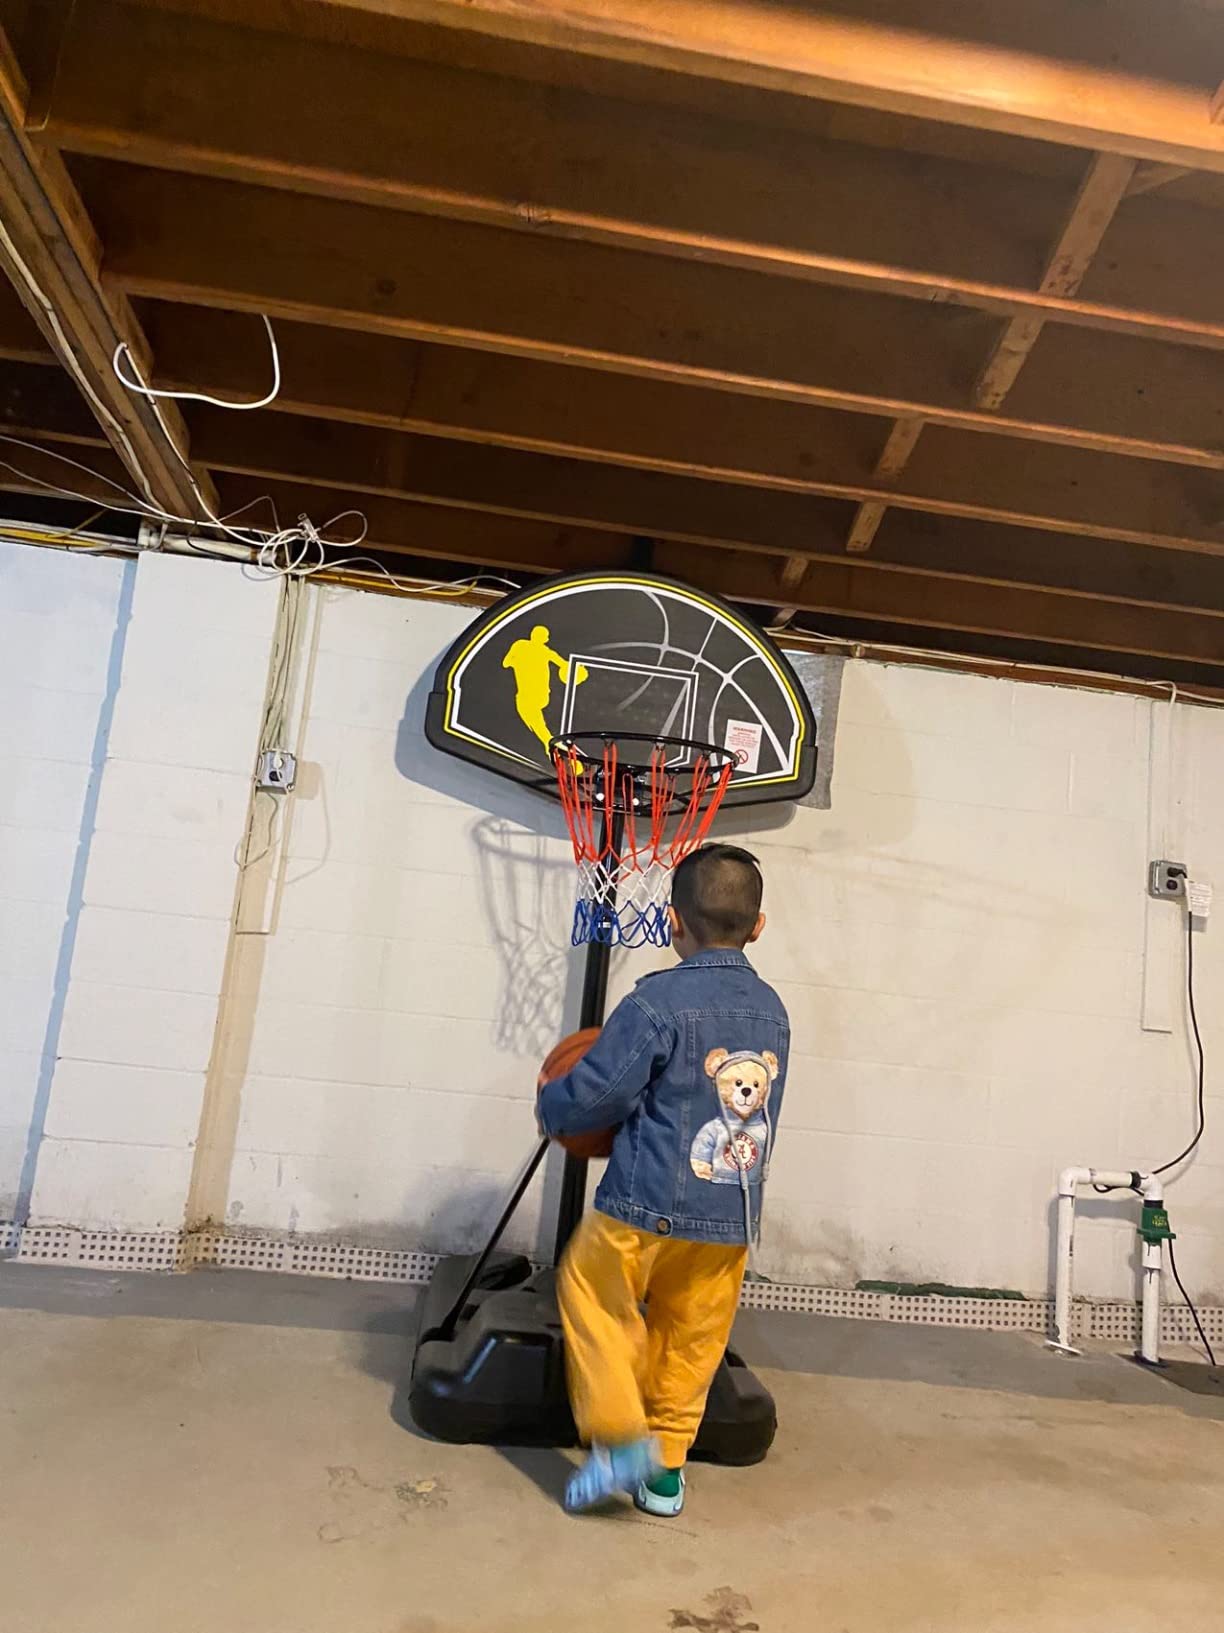 Strong basketball hoop